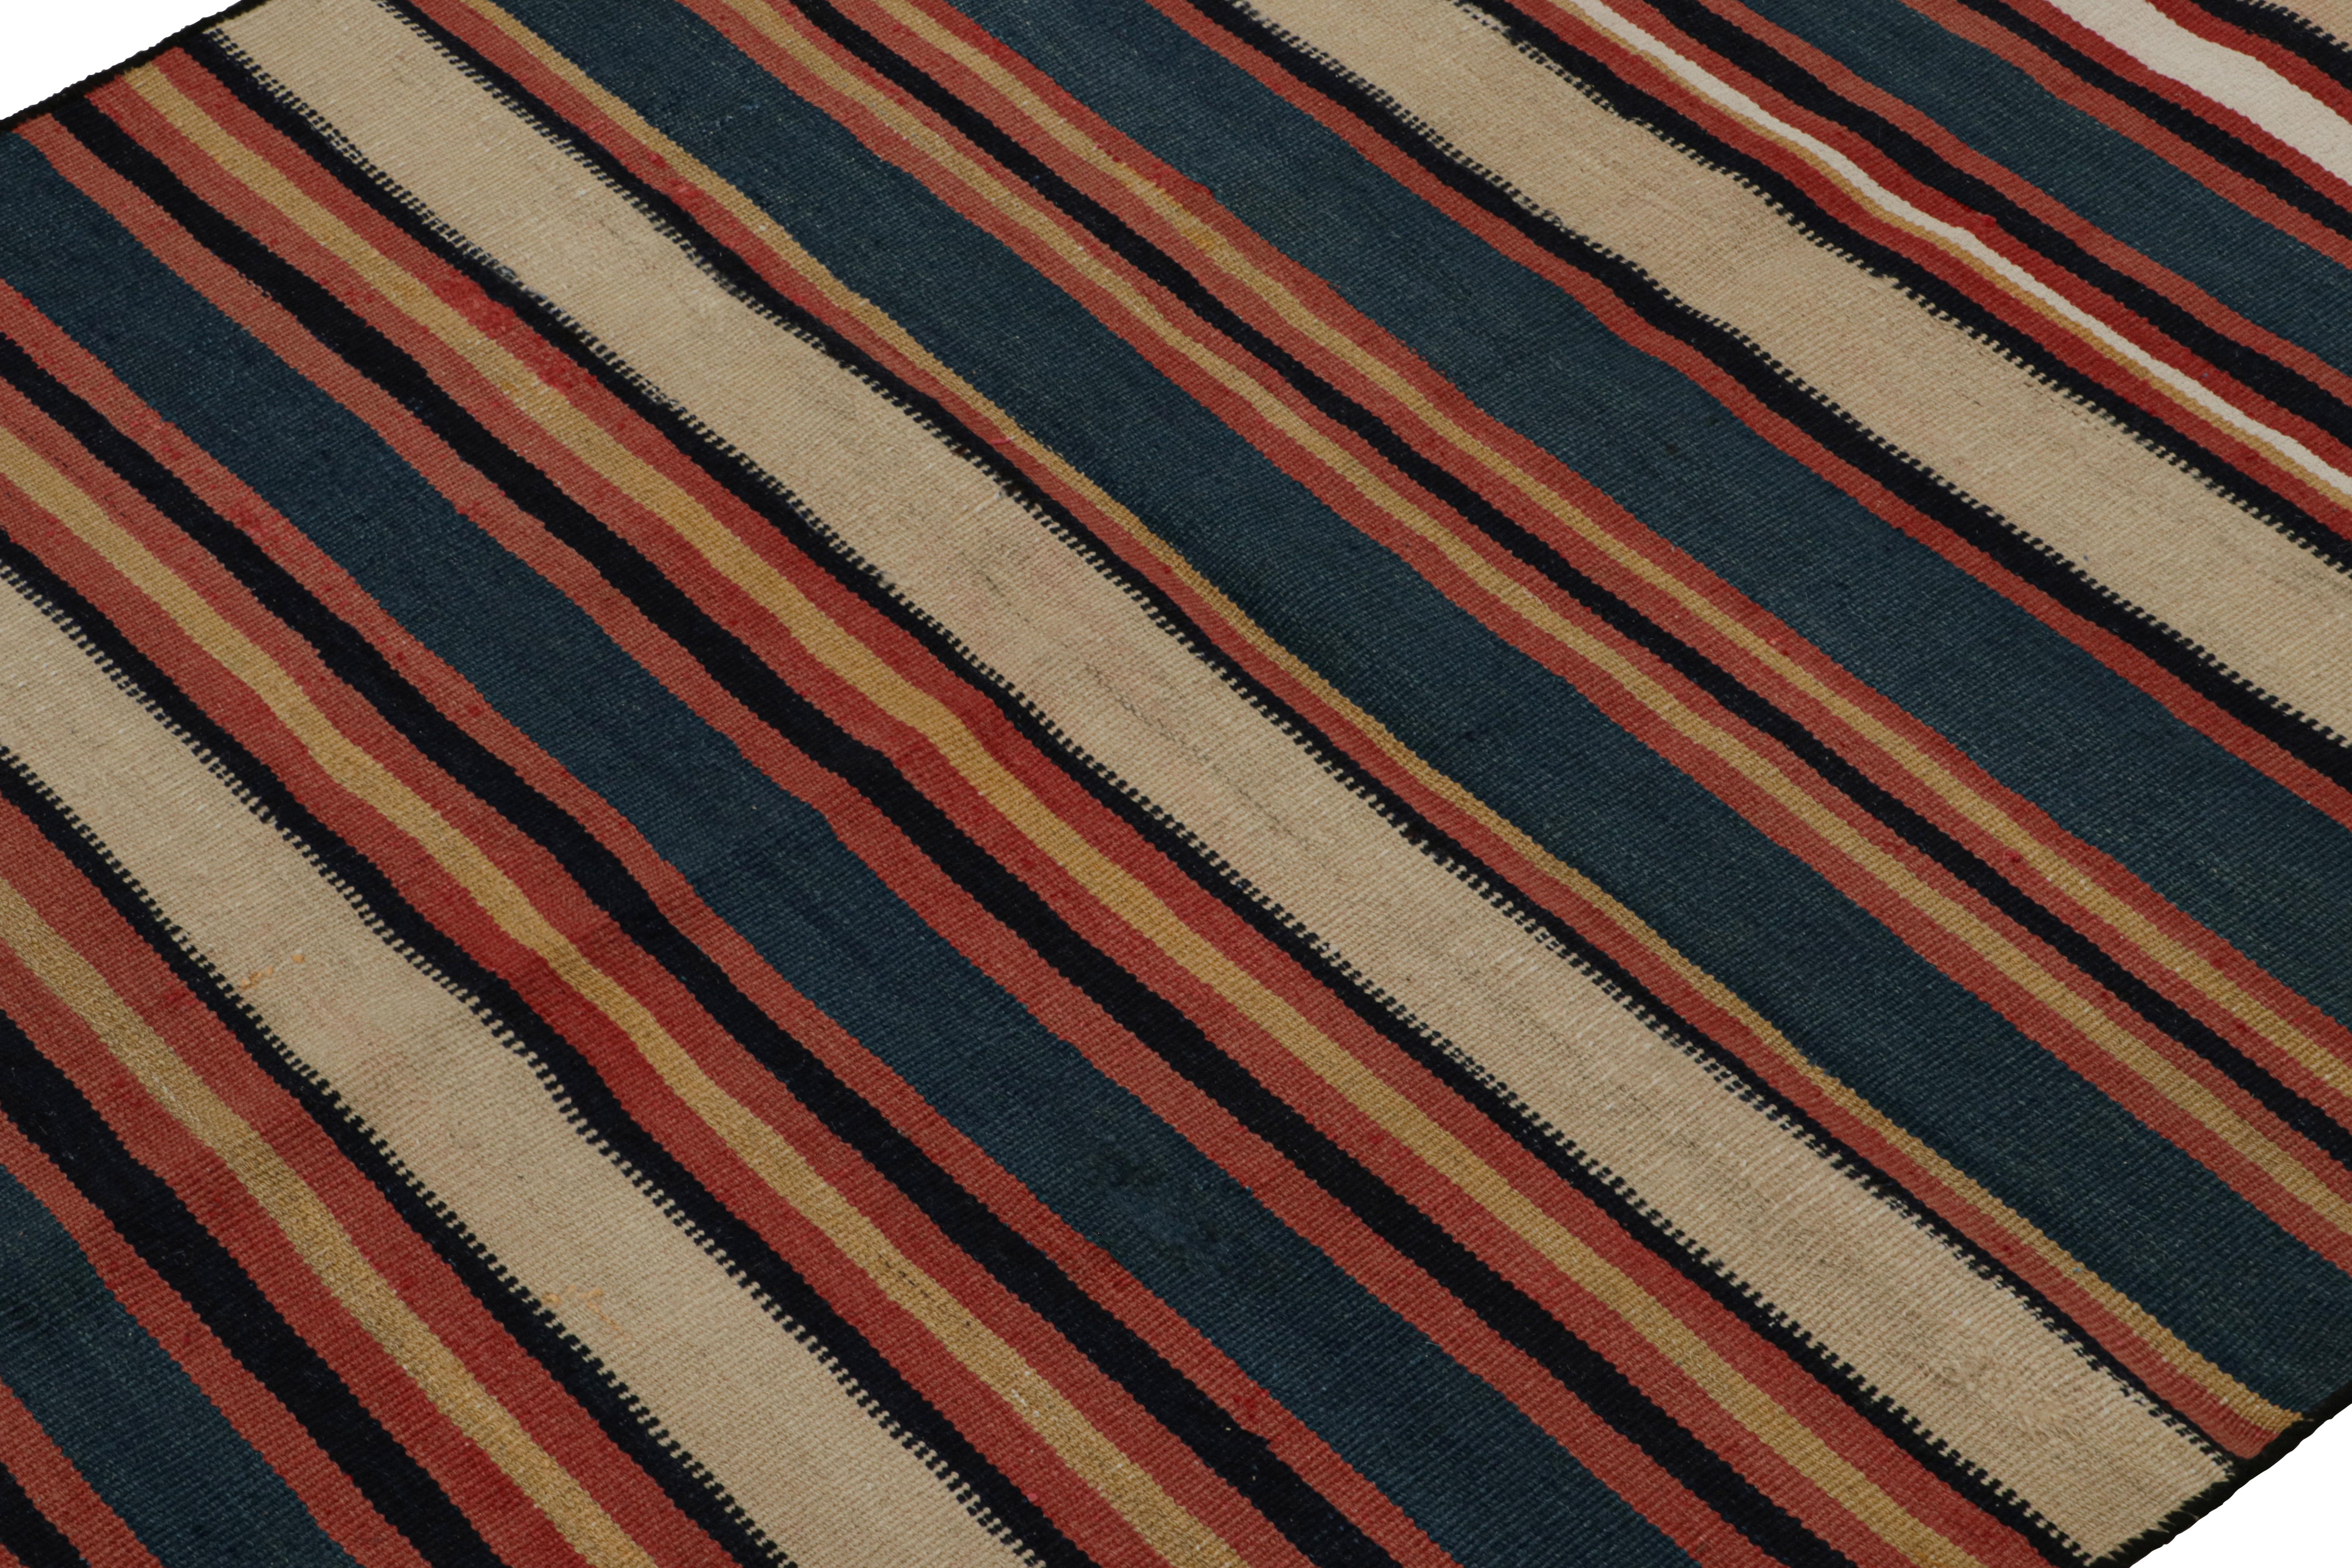 Hand-Woven Vintage Afghani tribal Kilim runner rug, with Stripes, from Rug & Kilim For Sale